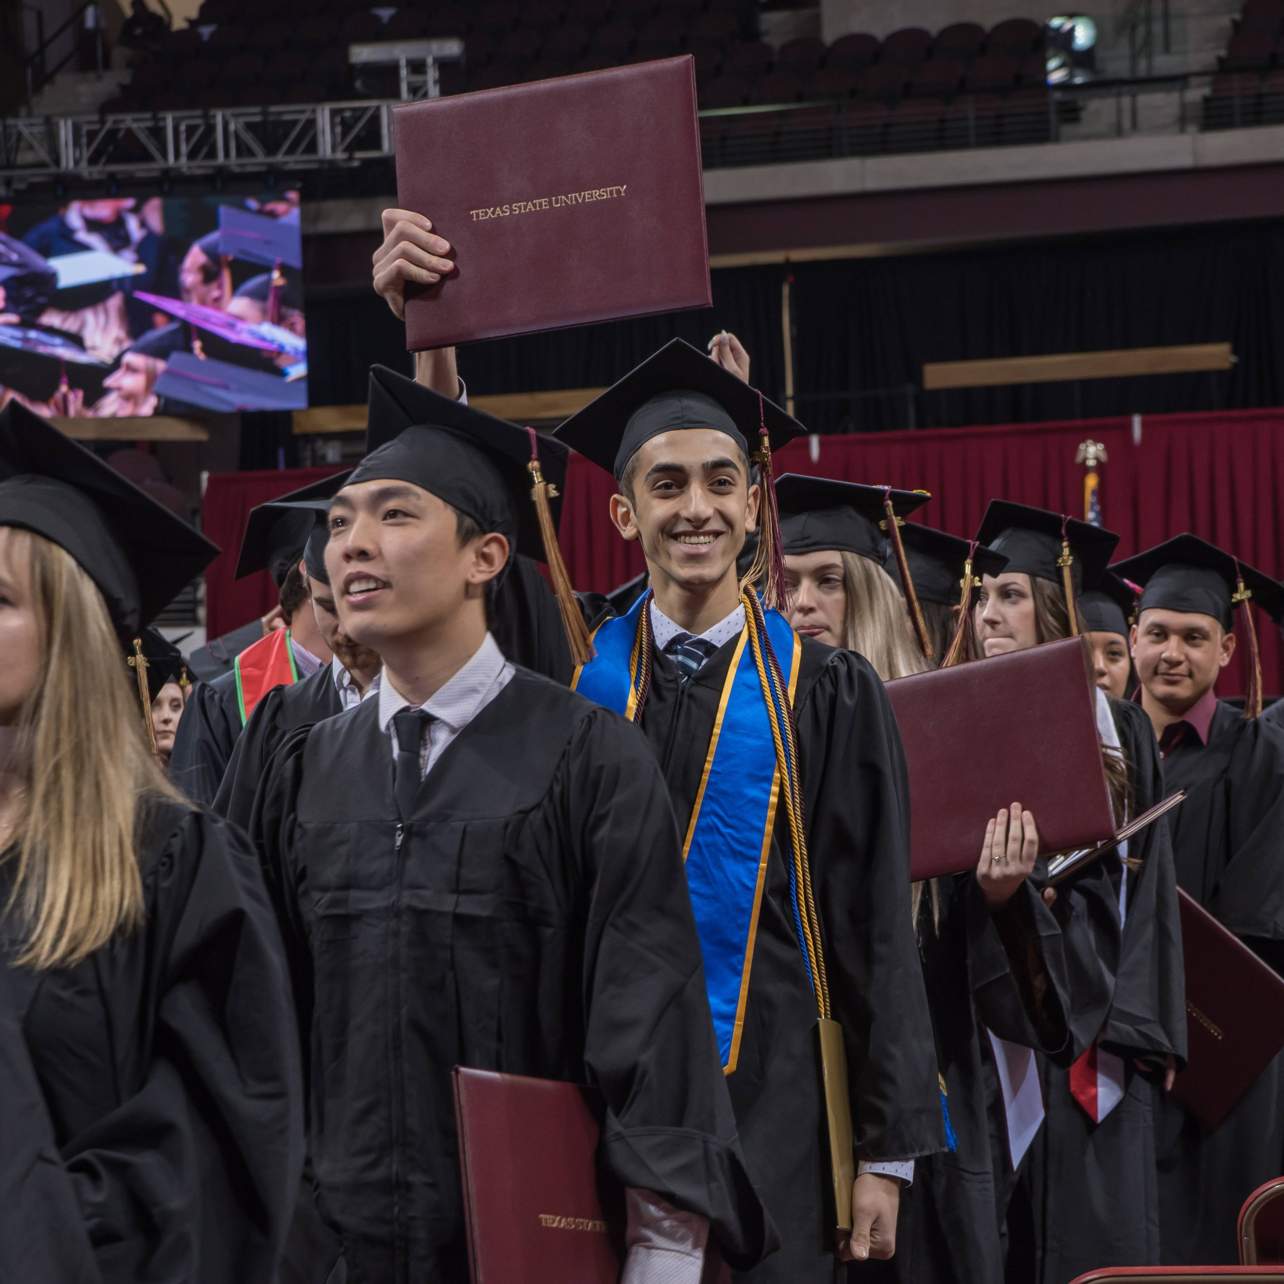 graduates walking down aisle, holding diploma overhead